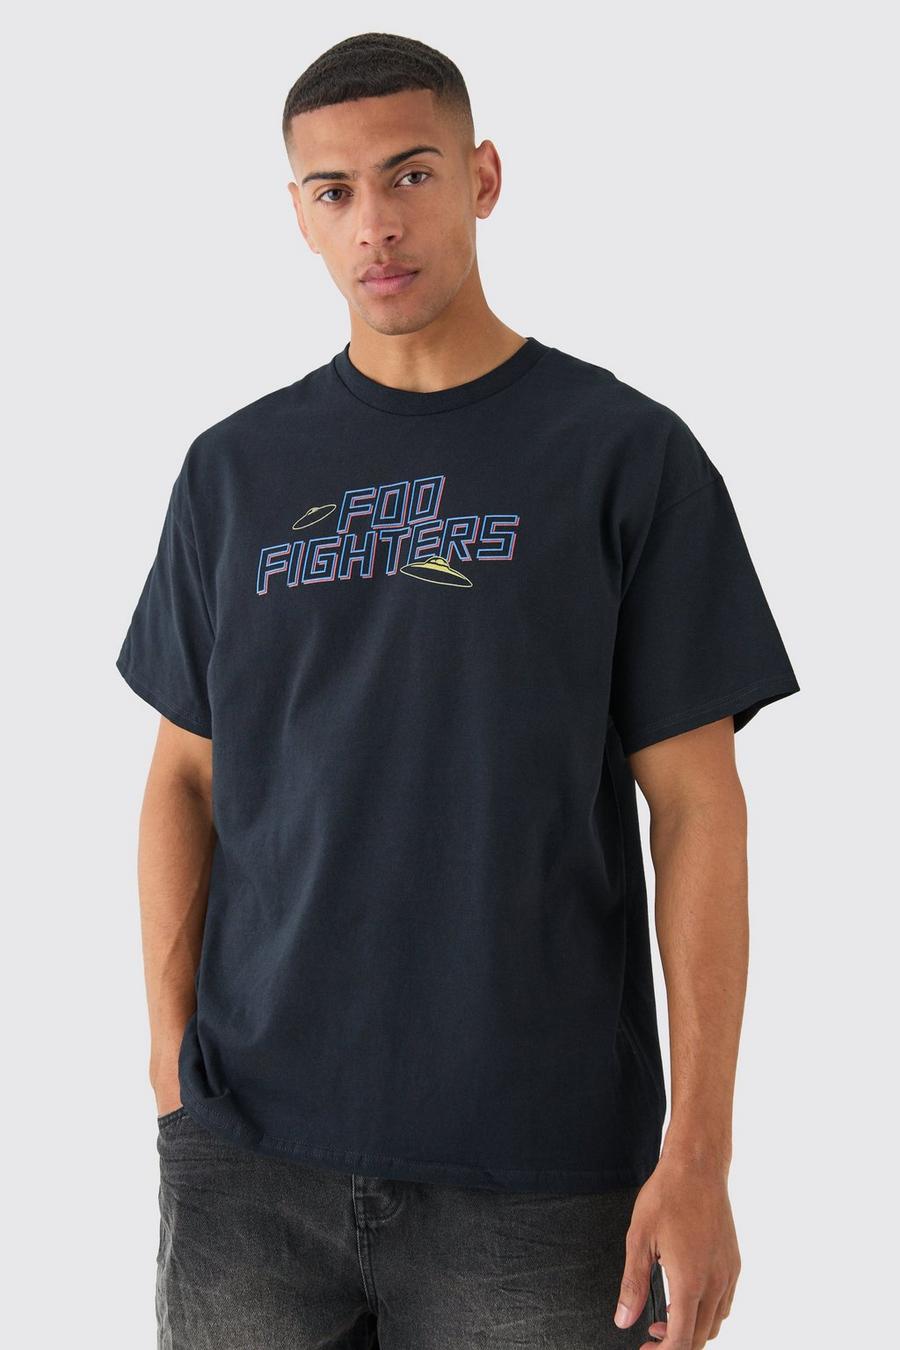 T-shirt oversize ufficiale dei Foo Fighters, Black